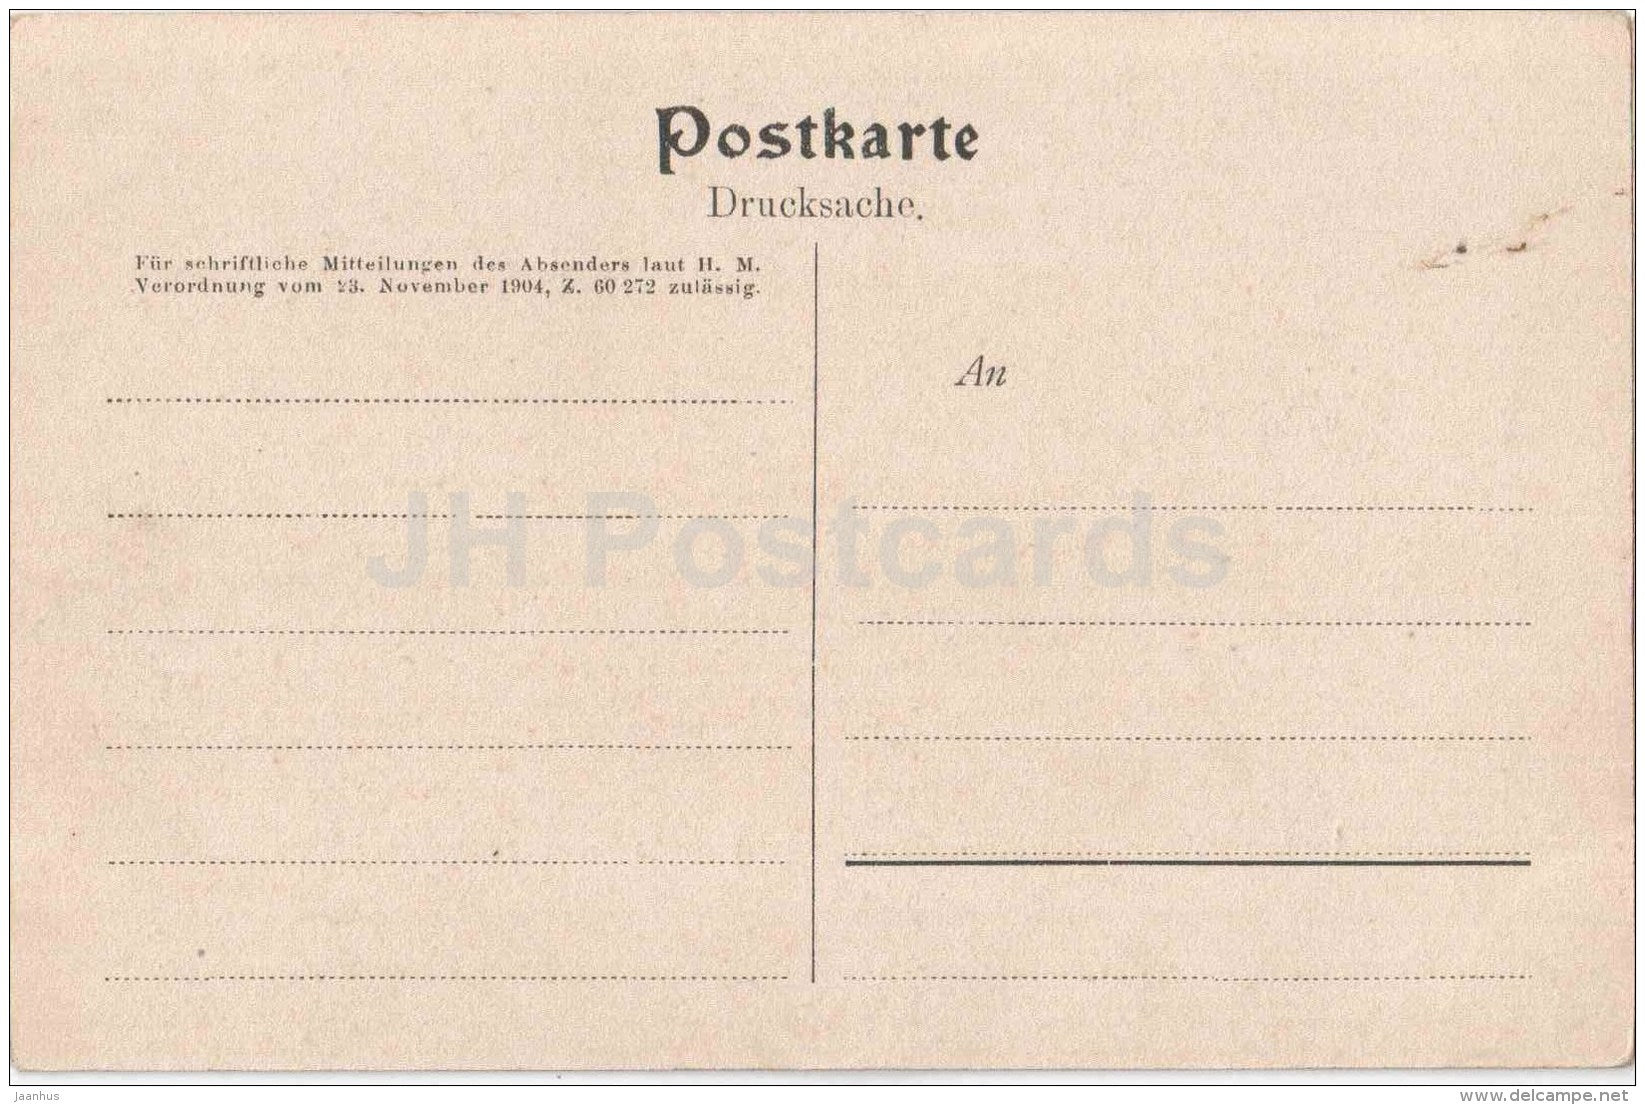 Josef Haydn - composer - sculpture - monument - Wien - Vienna - Austria - 8030 - old postcard - unused - JH Postcards